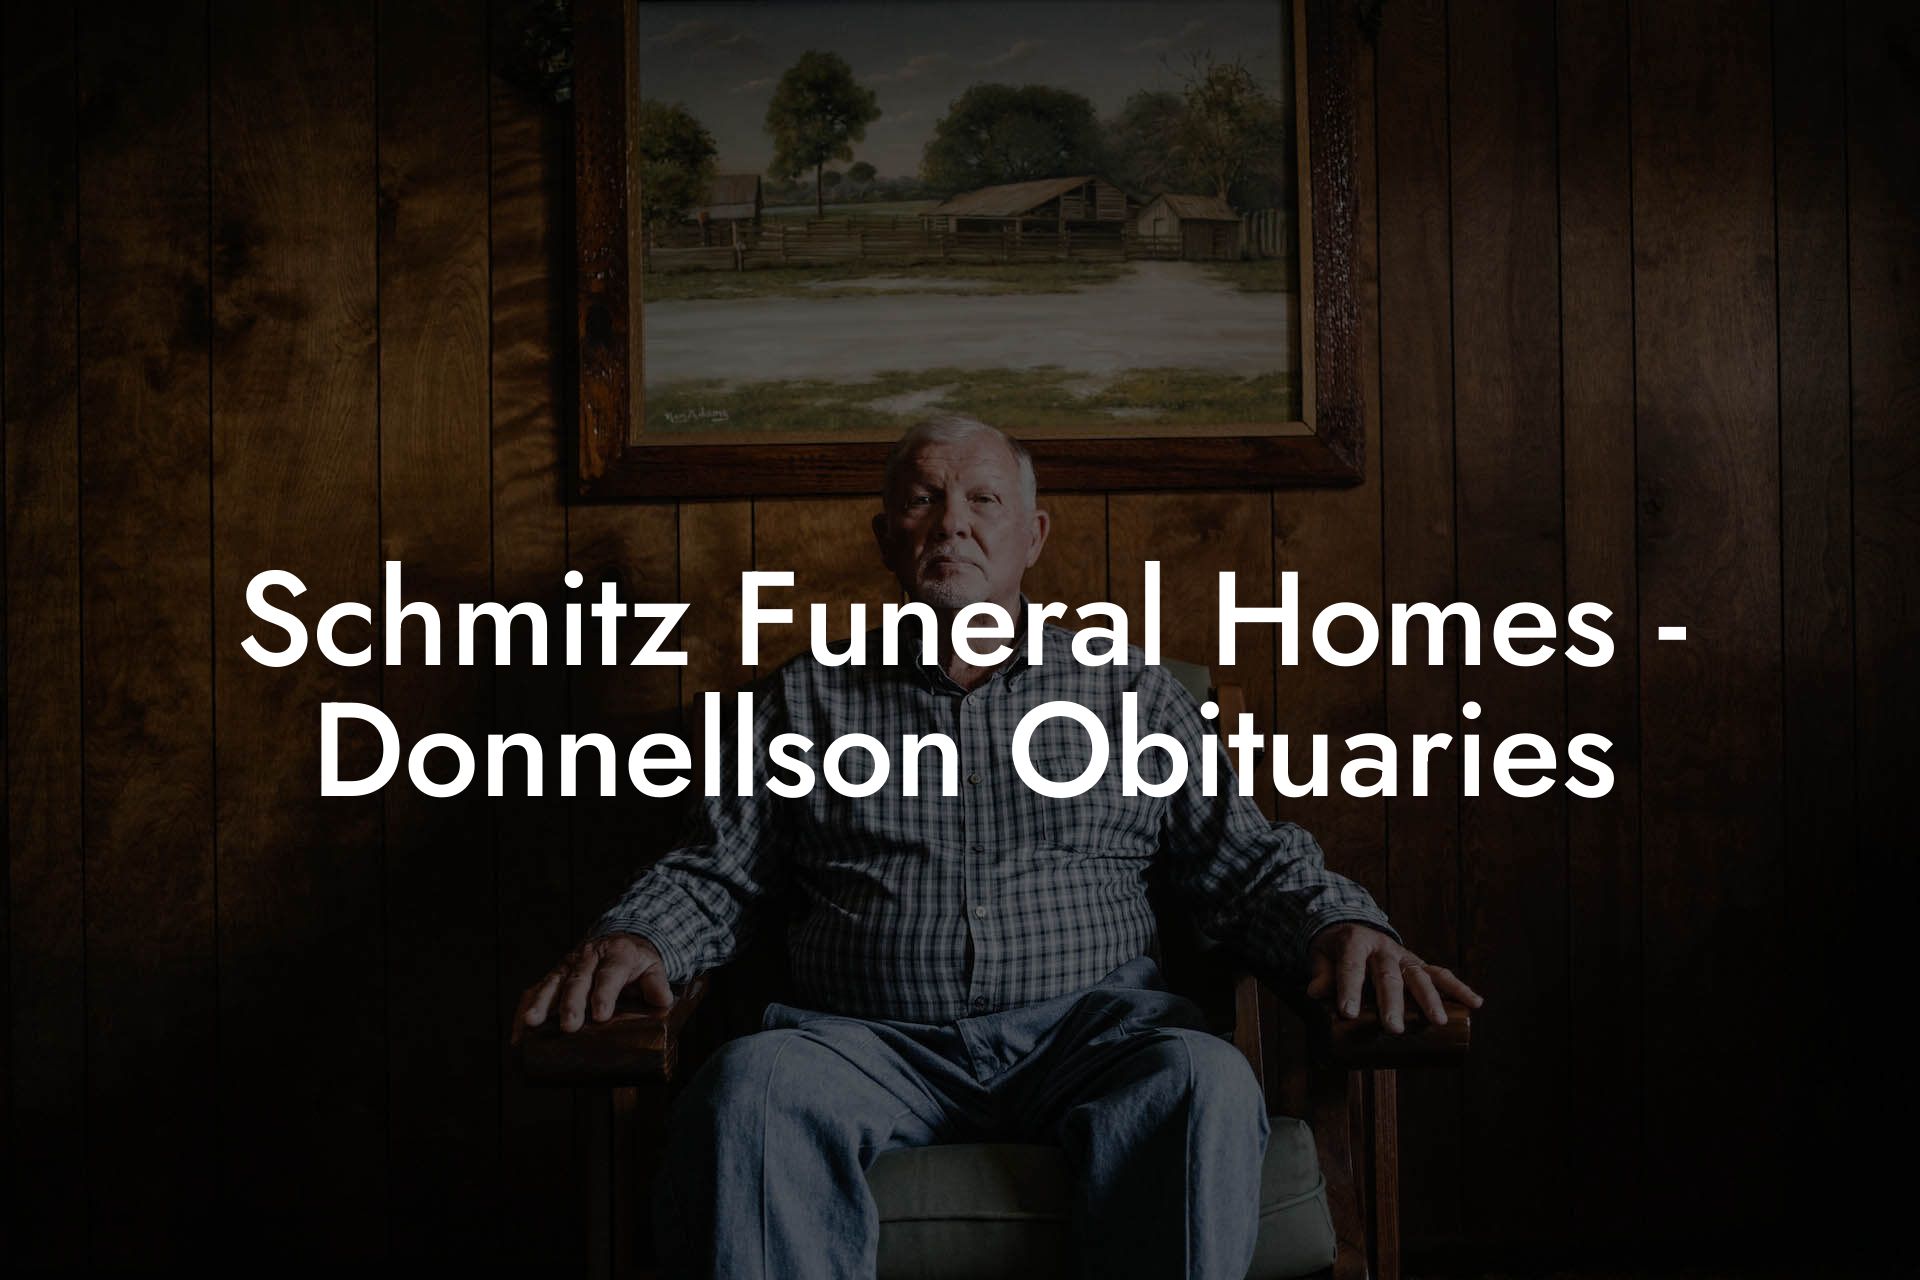 Schmitz Funeral Homes - Donnellson Obituaries